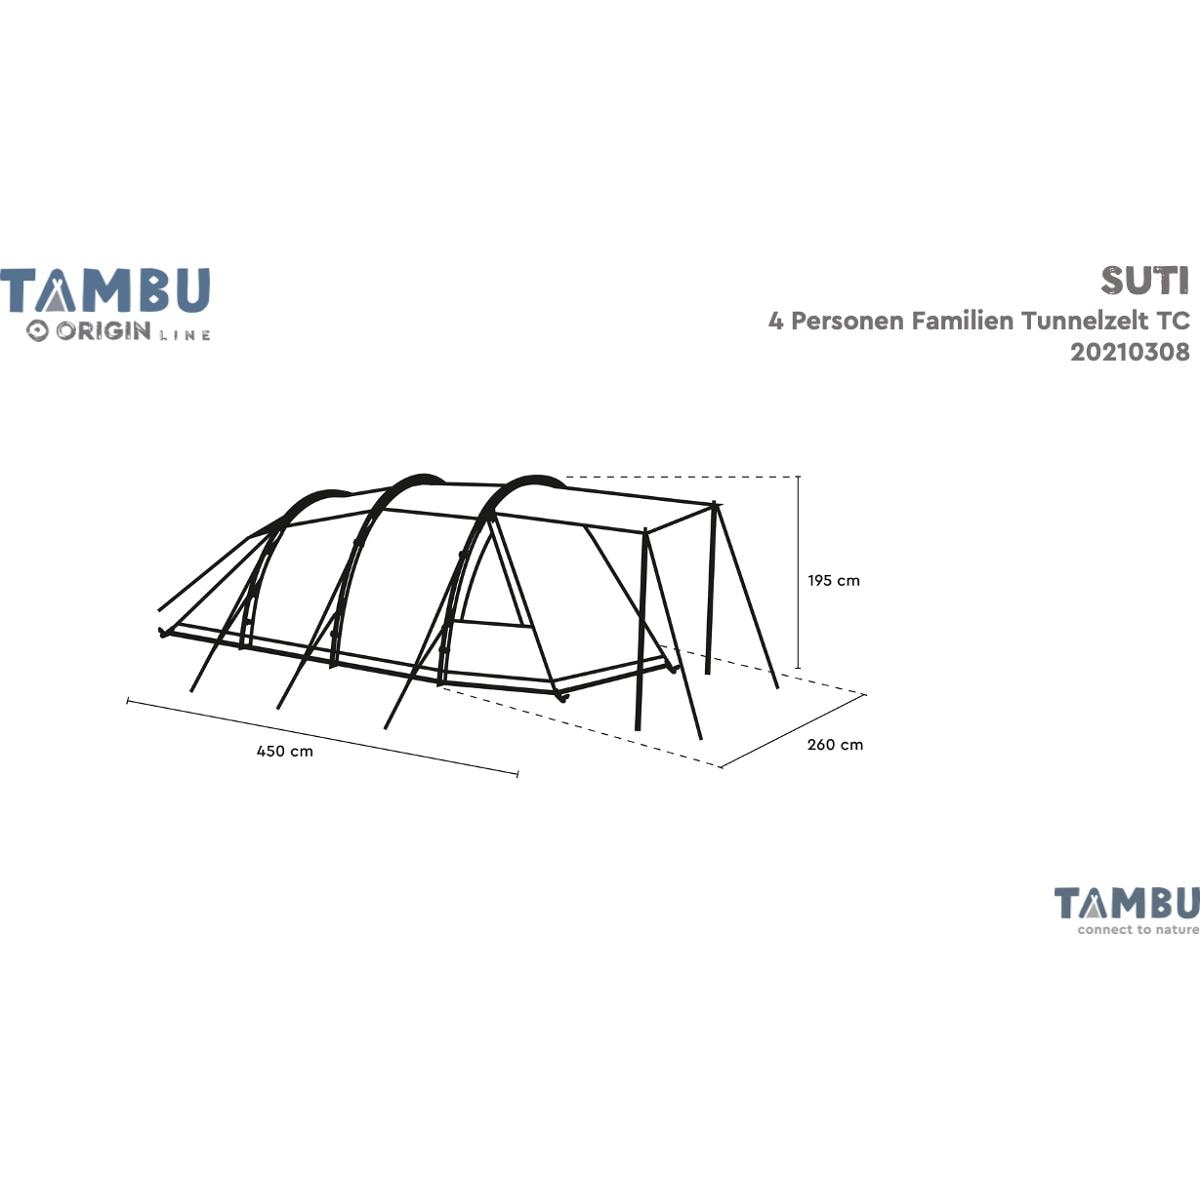 Tambu Suti Familien Tunnelzelt TC, 4 Personen, 450x260x195cm, grau/blau bei  Camping Wagner Campingzubehör